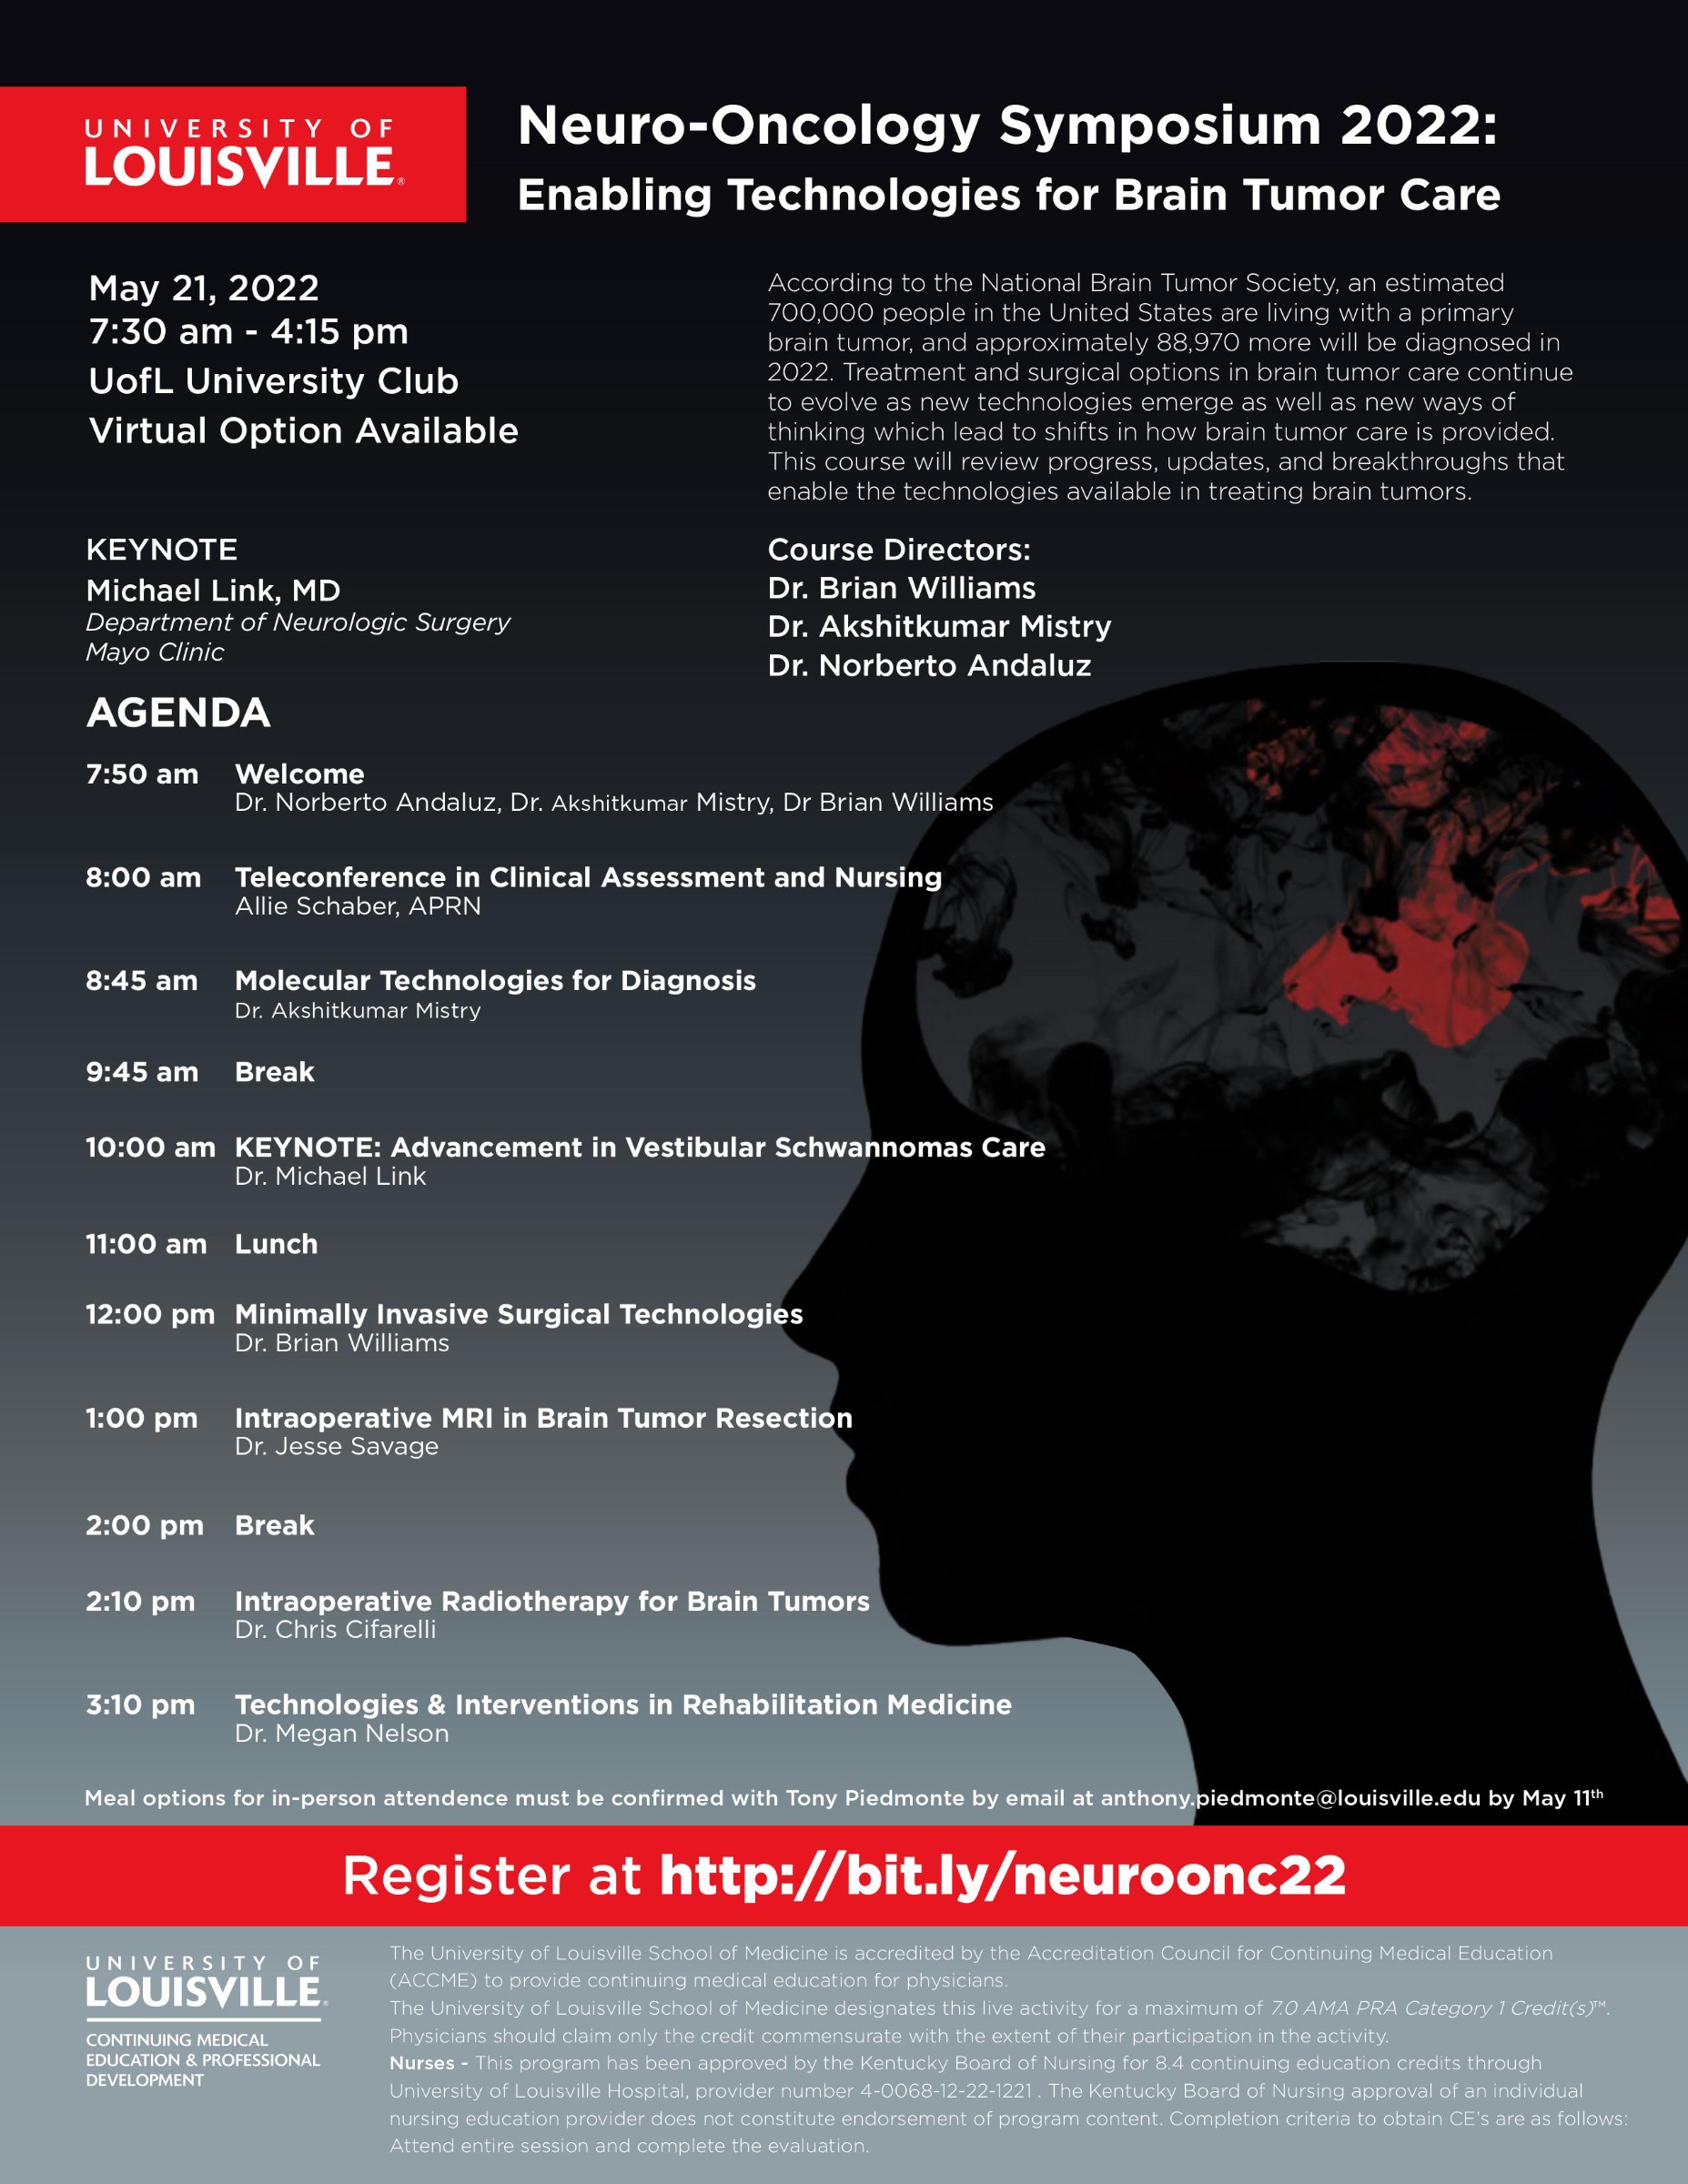 Neuro-Oncology Symposium 2022 flyer